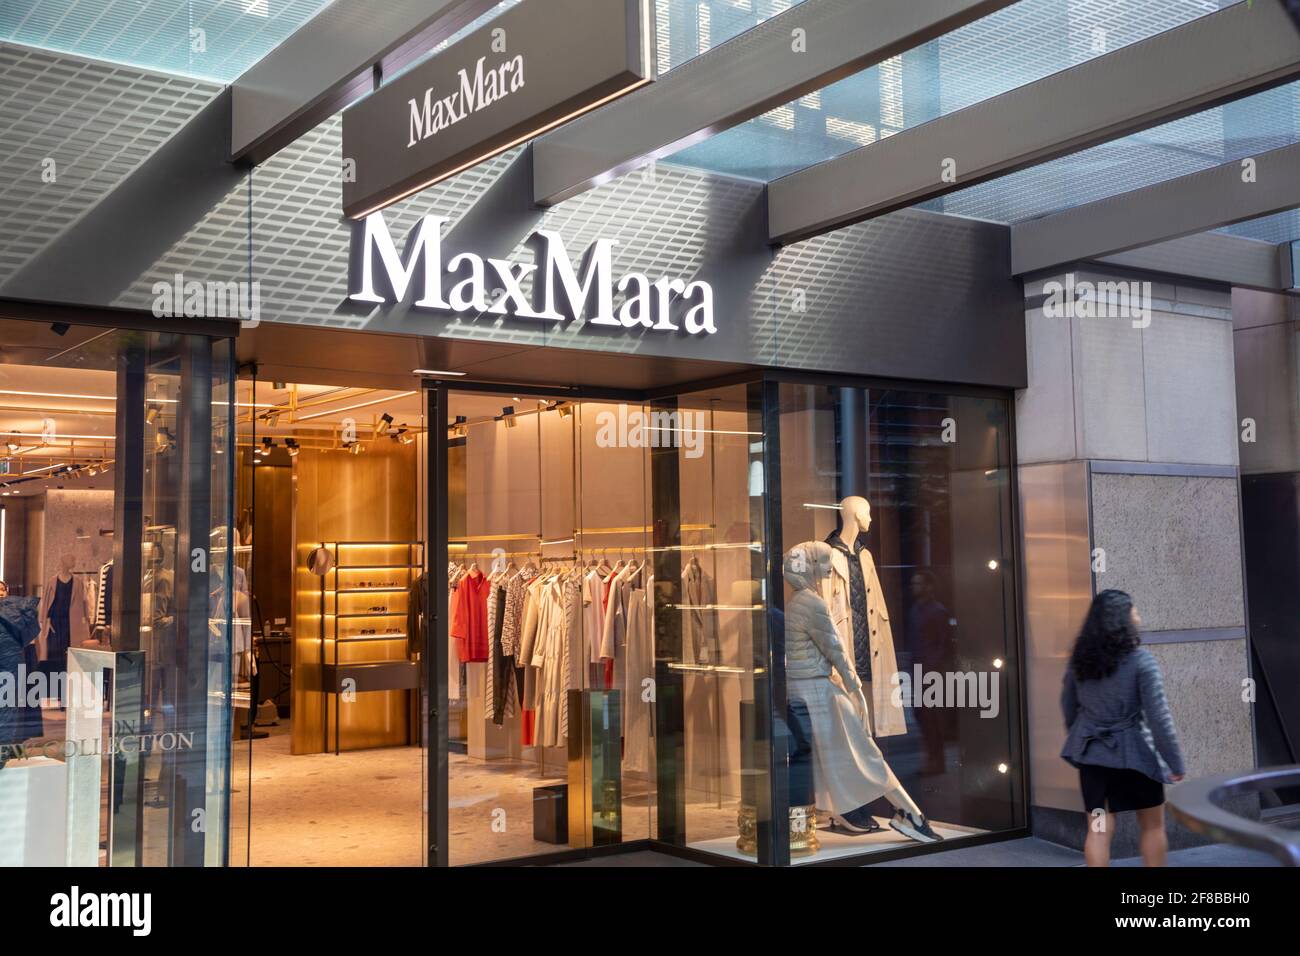 Maxmara clothes store in George street,Sydney city centre,NSW,Australia Stock Photo